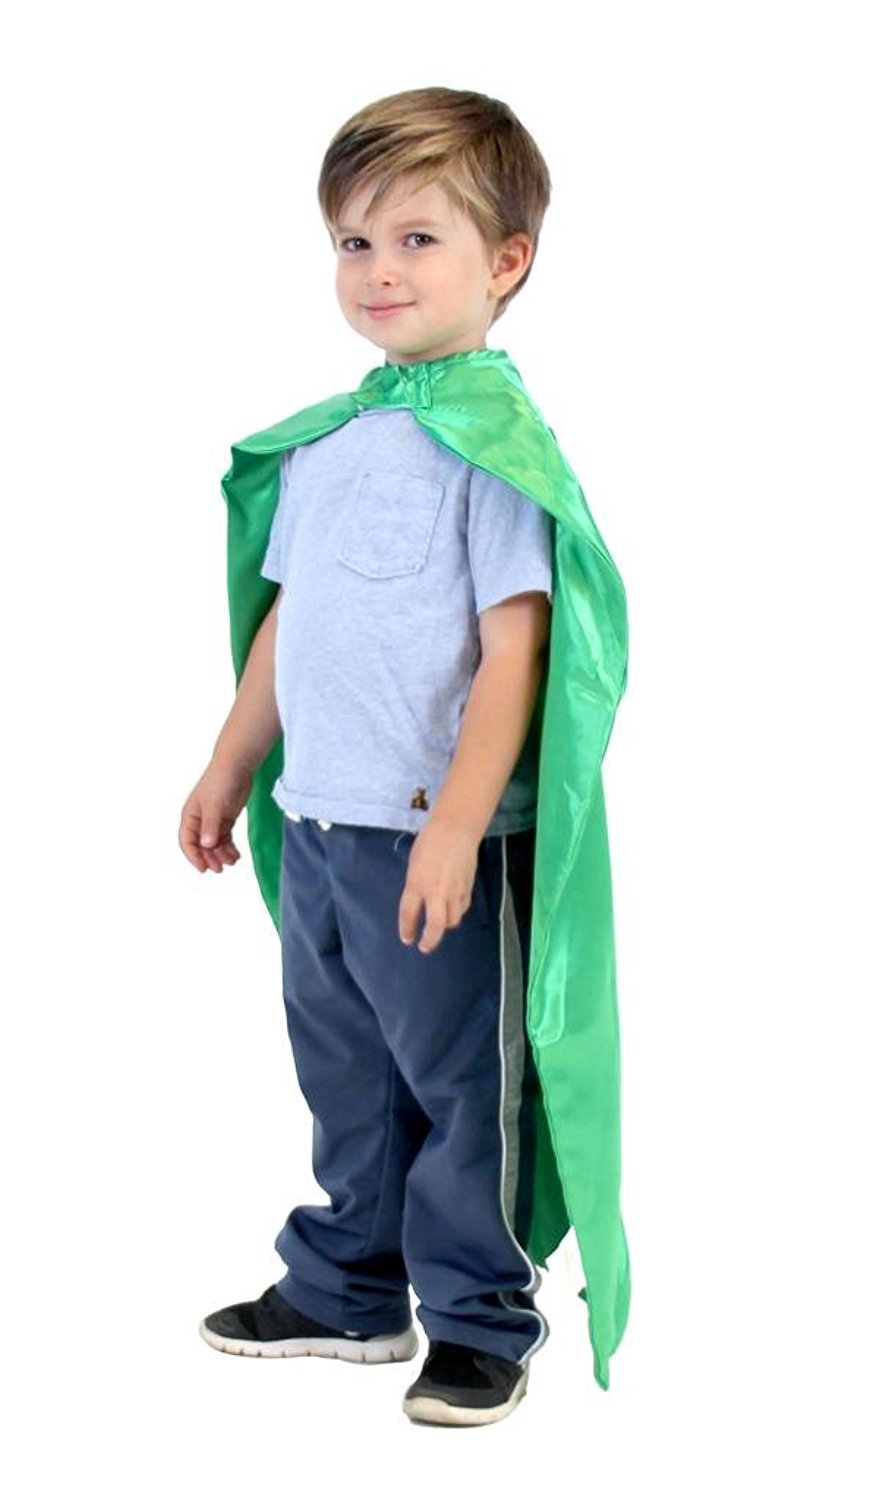 Reversible Child Superhero Costume Cape - image 1 of 1